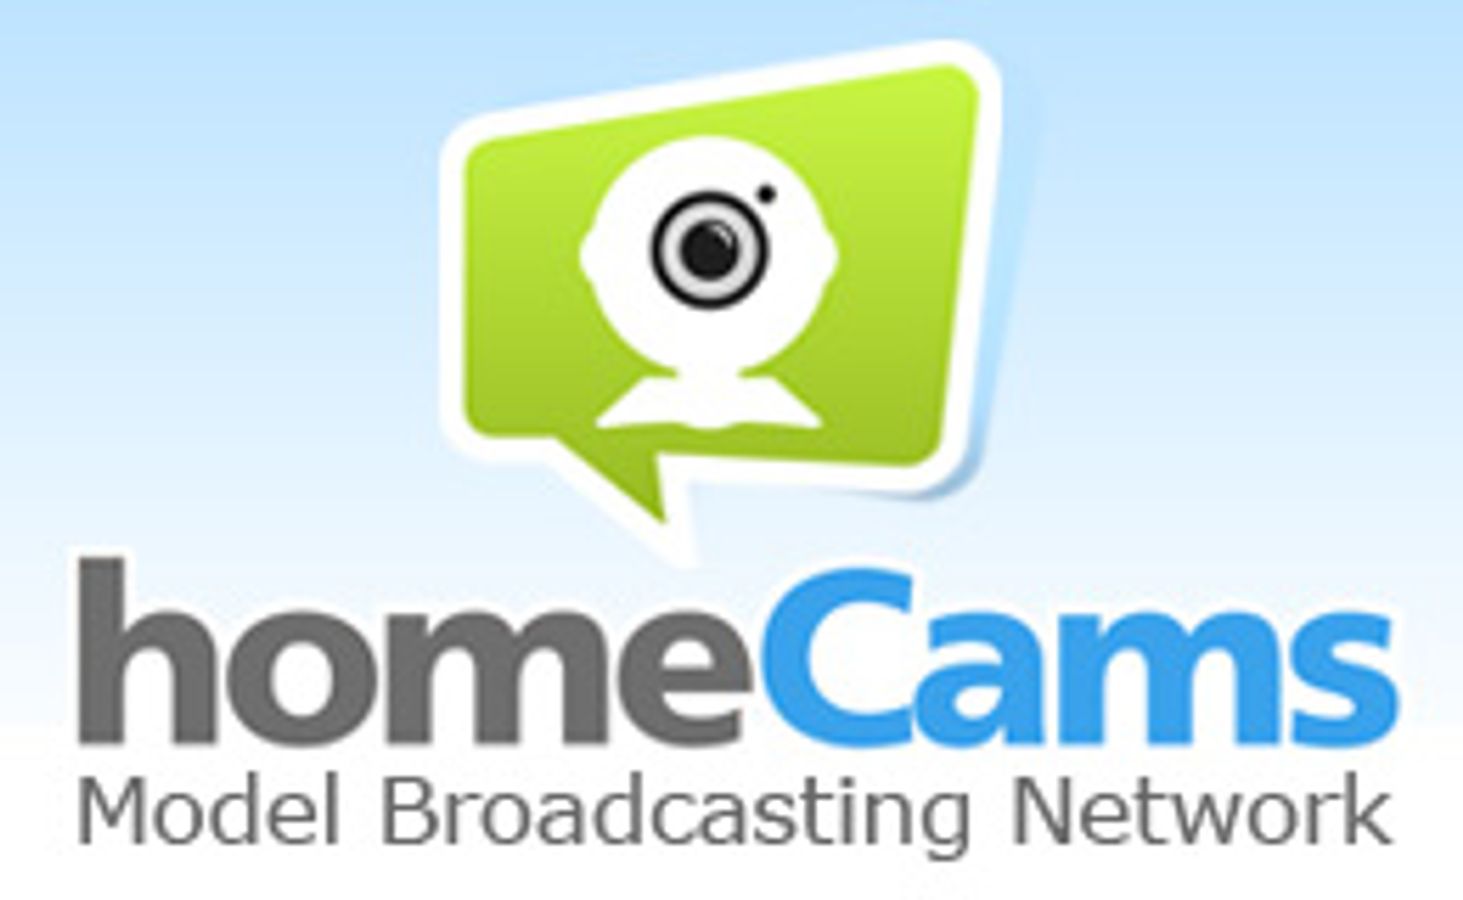 Model Broadcasting Network - Gamma